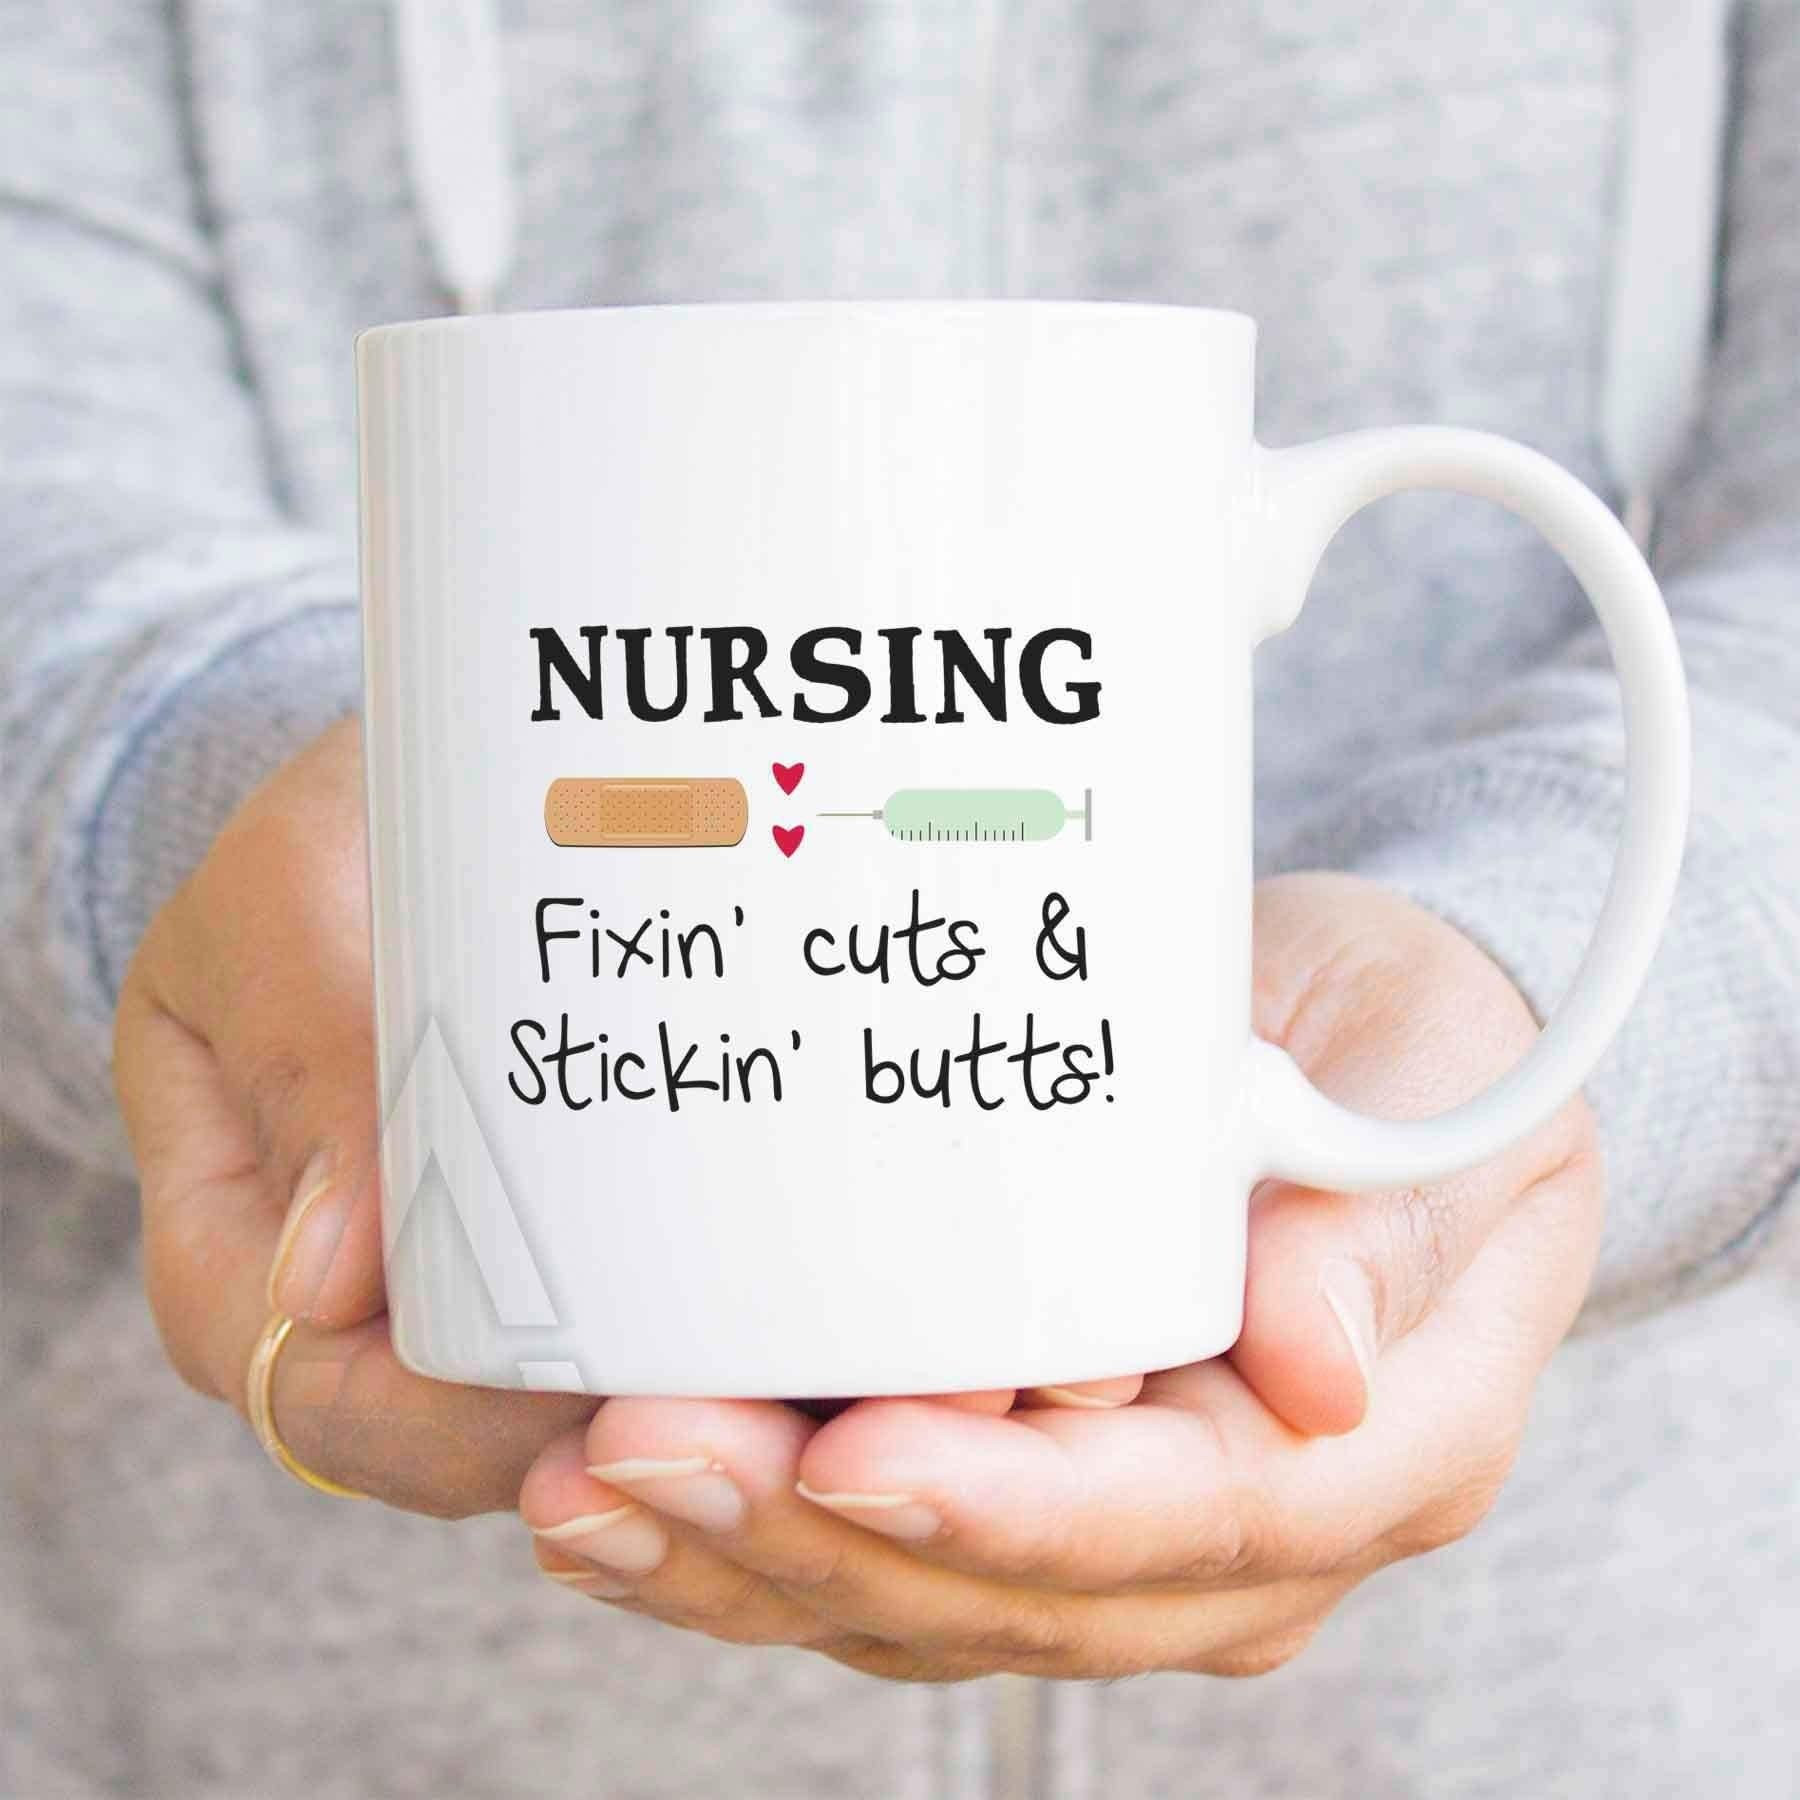 Graduation Gift Ideas For Nursing Students
 10 Unique Nursing School Graduation Gift Ideas 2019